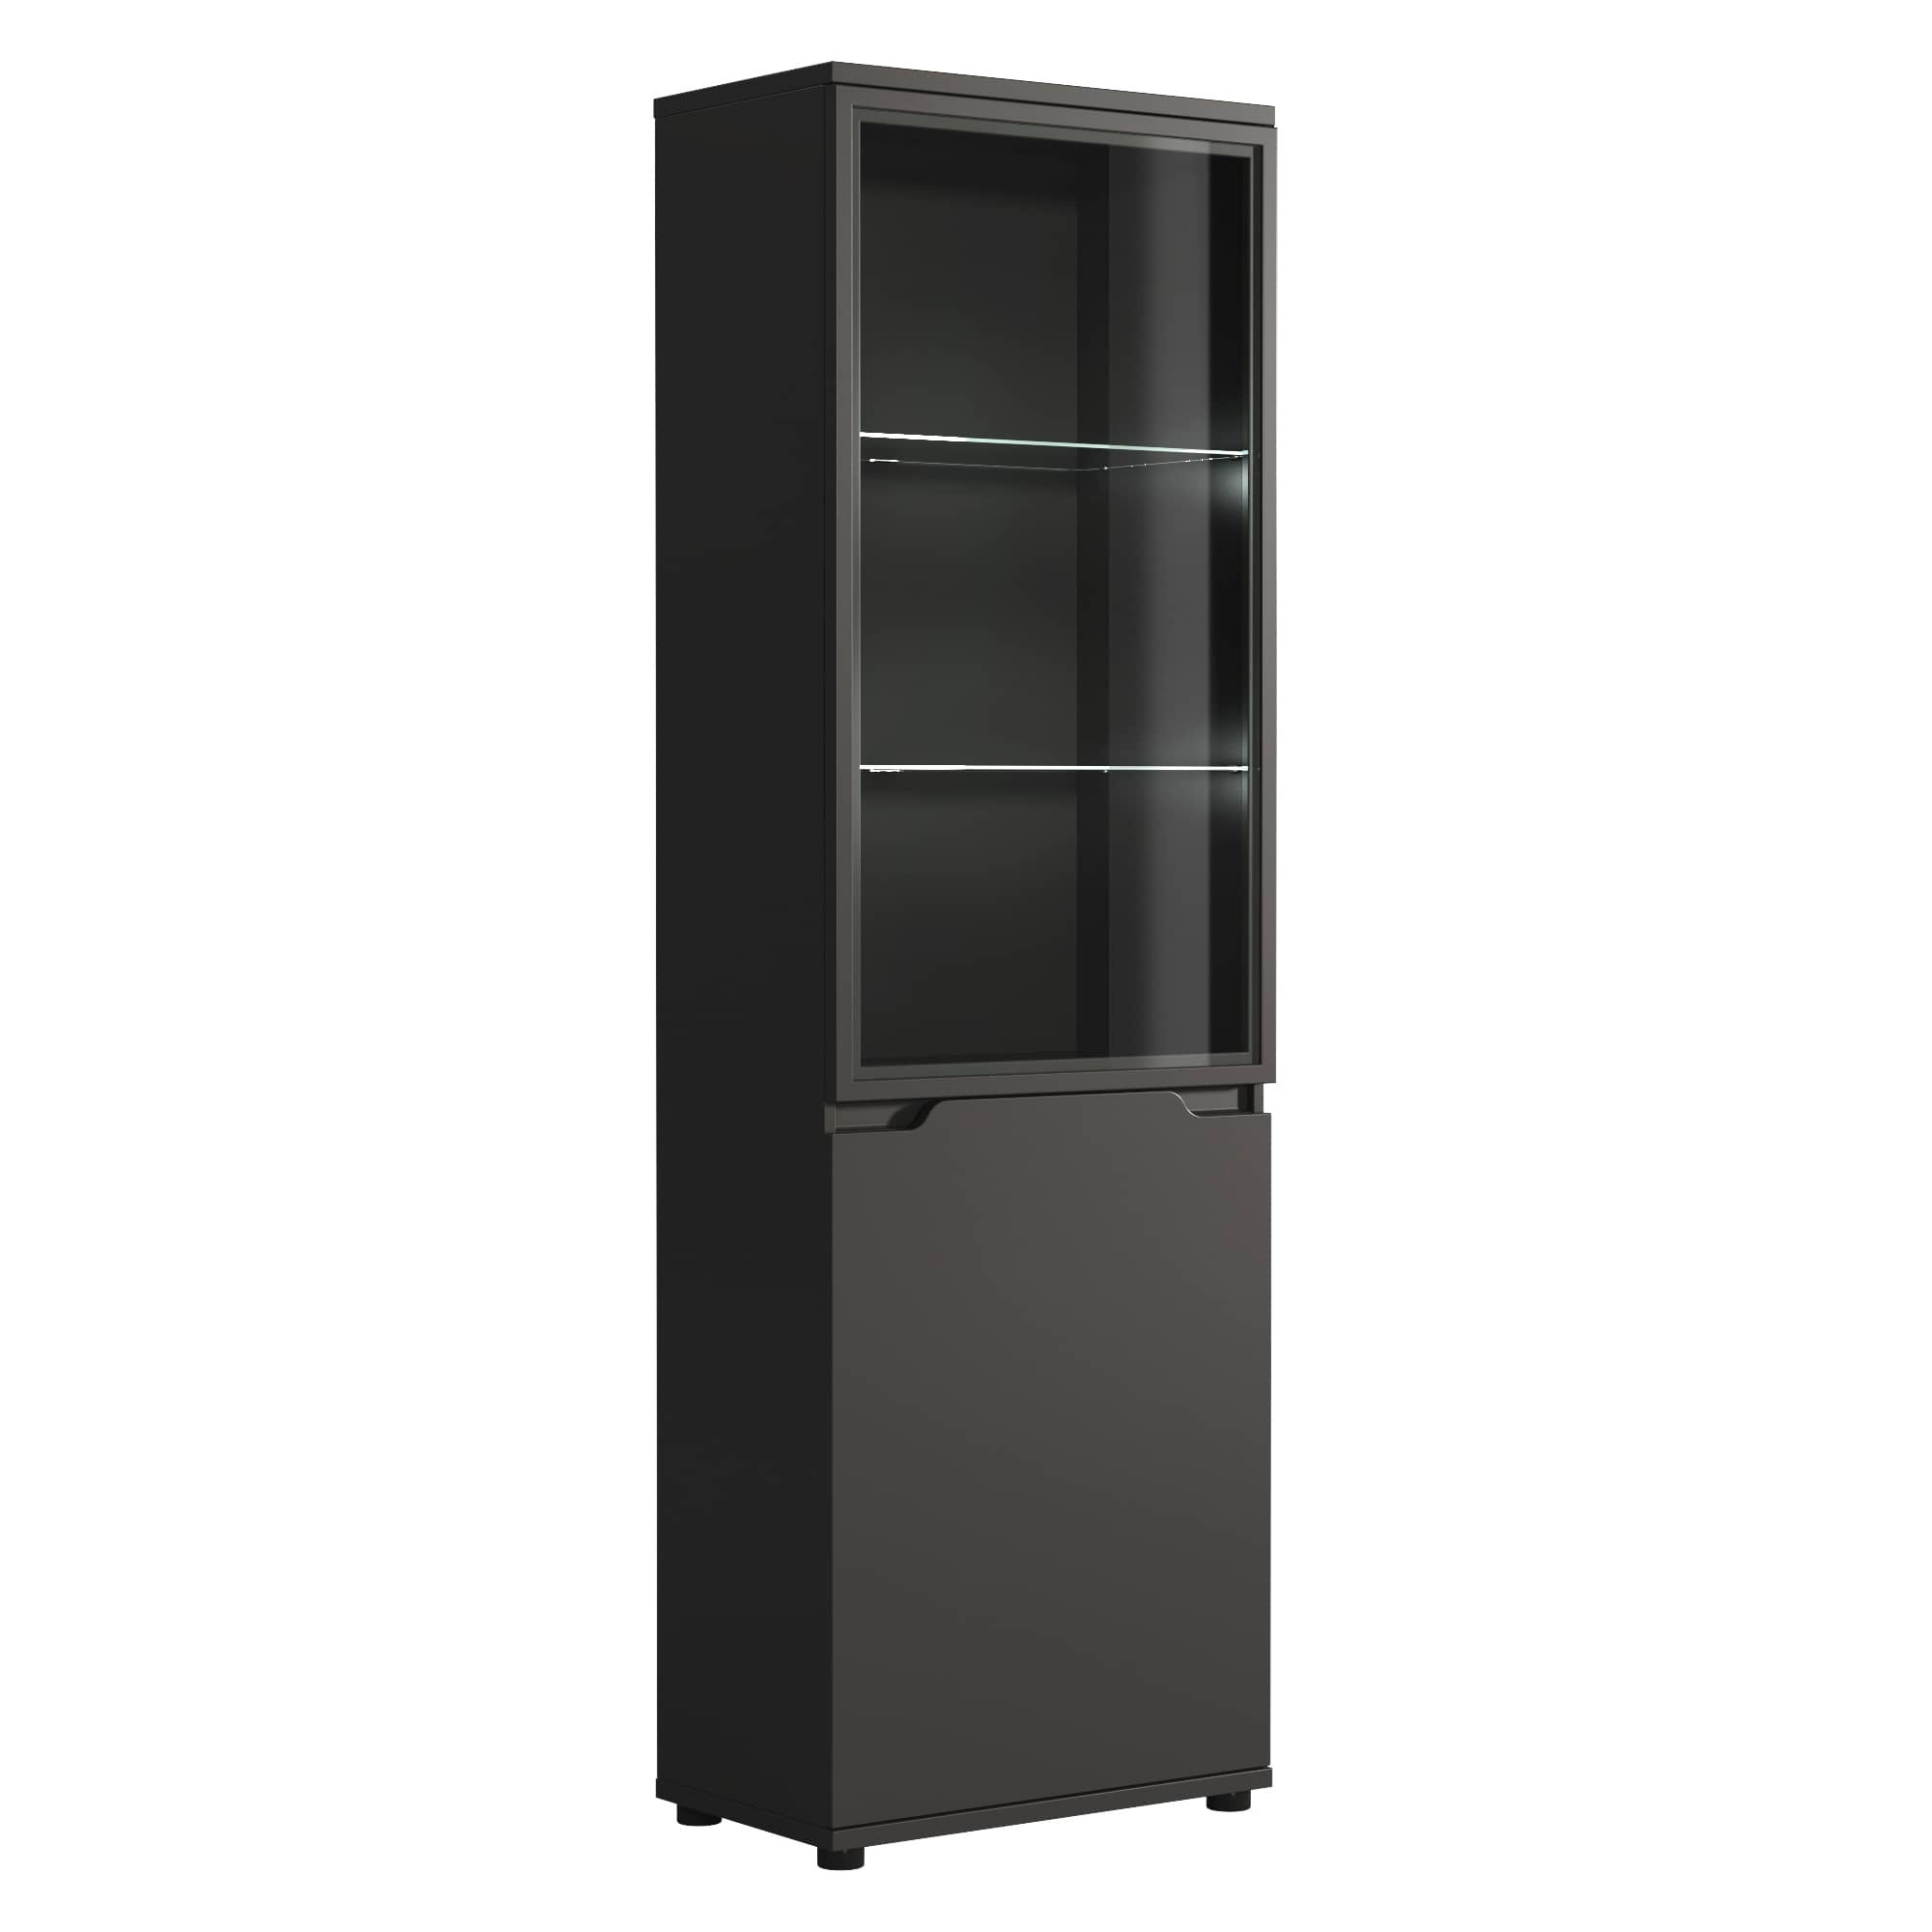 Volpiano 10 Tall Display Cabinet 60cm - Graphite 60cm - image 1